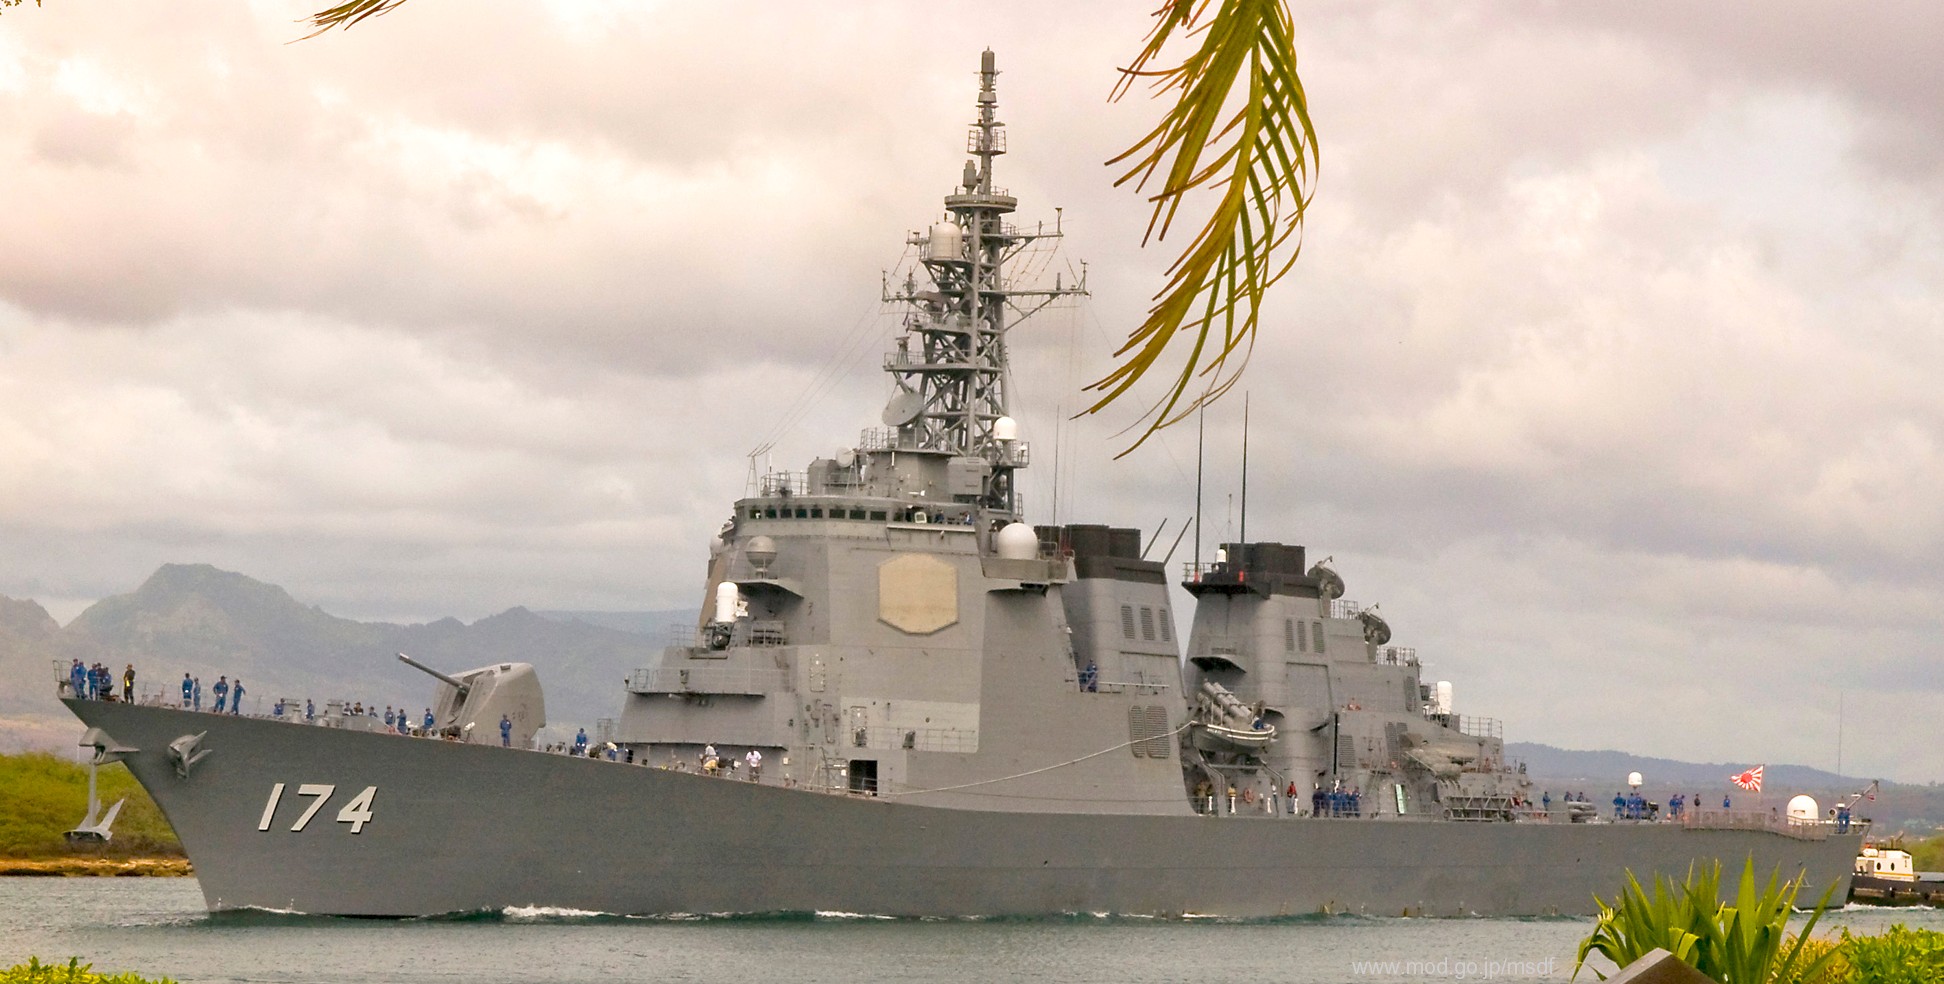 ddg-174 js kirishima kongo class guided missile destroyer aegis japan maritime self defense force jmsdf pearl harbor hawaii 09